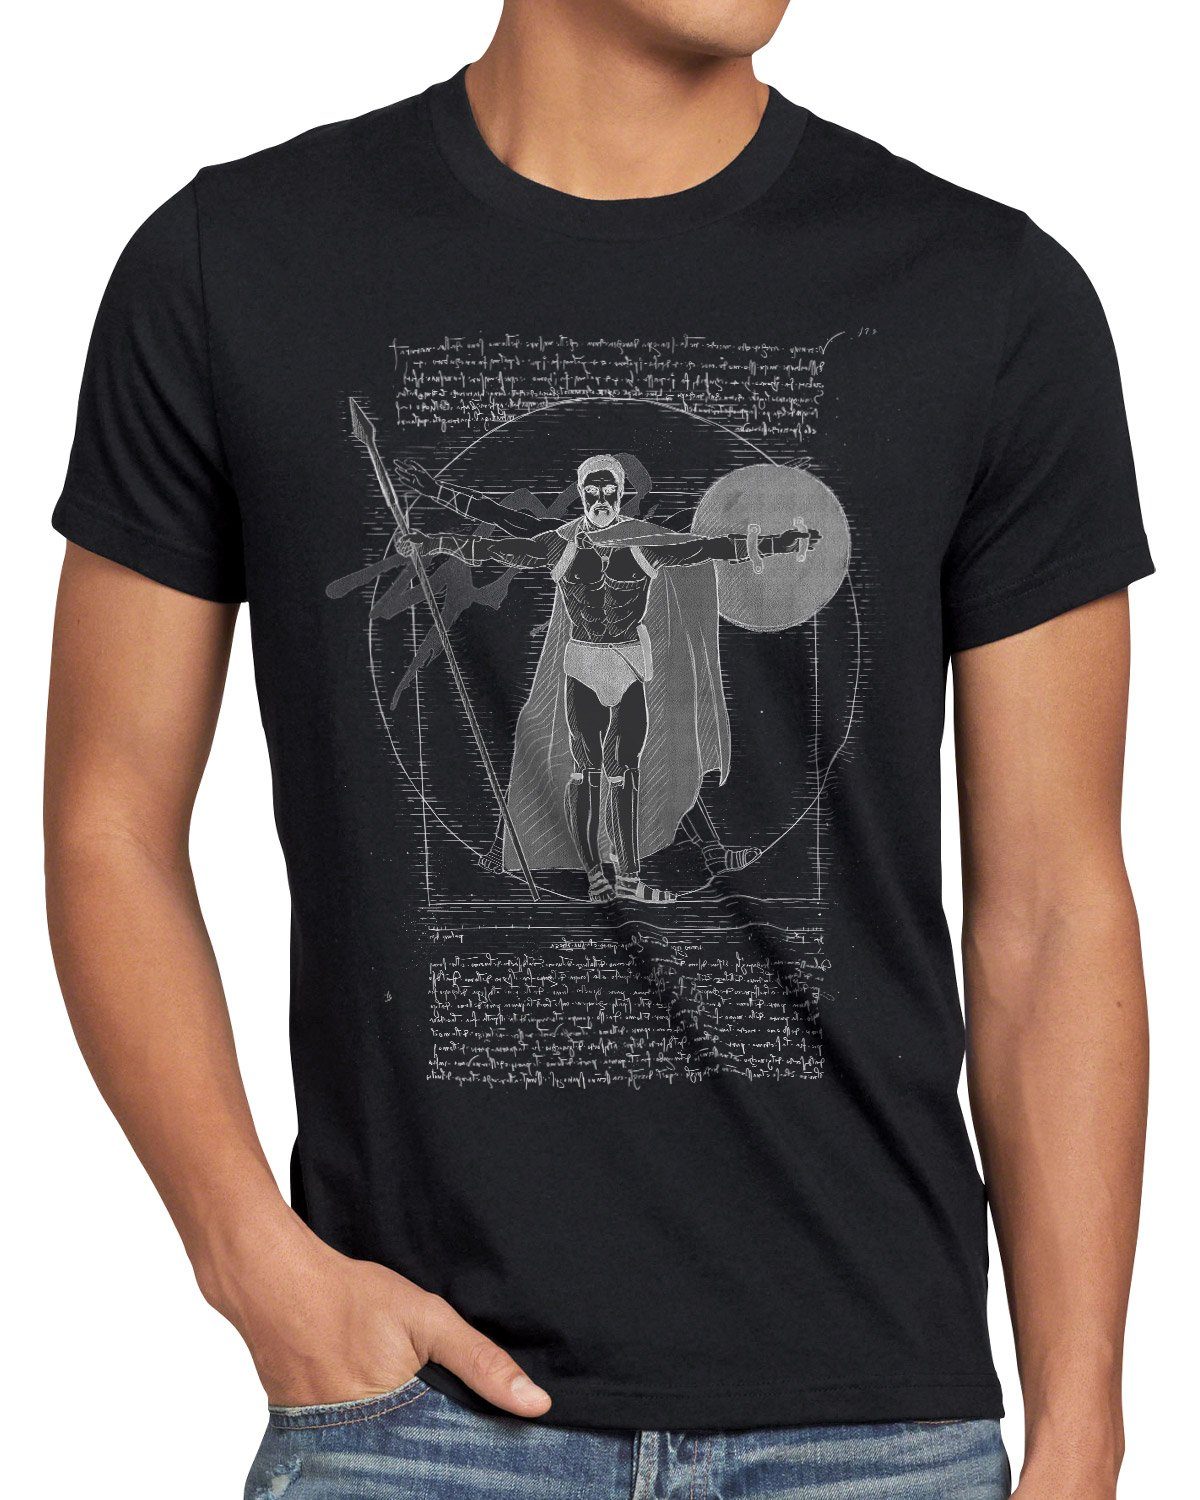 Herren Print-Shirt Spartaner antiker Vitruvianischer kämpfer 300 dreihundert T-Shirt schwarz style3